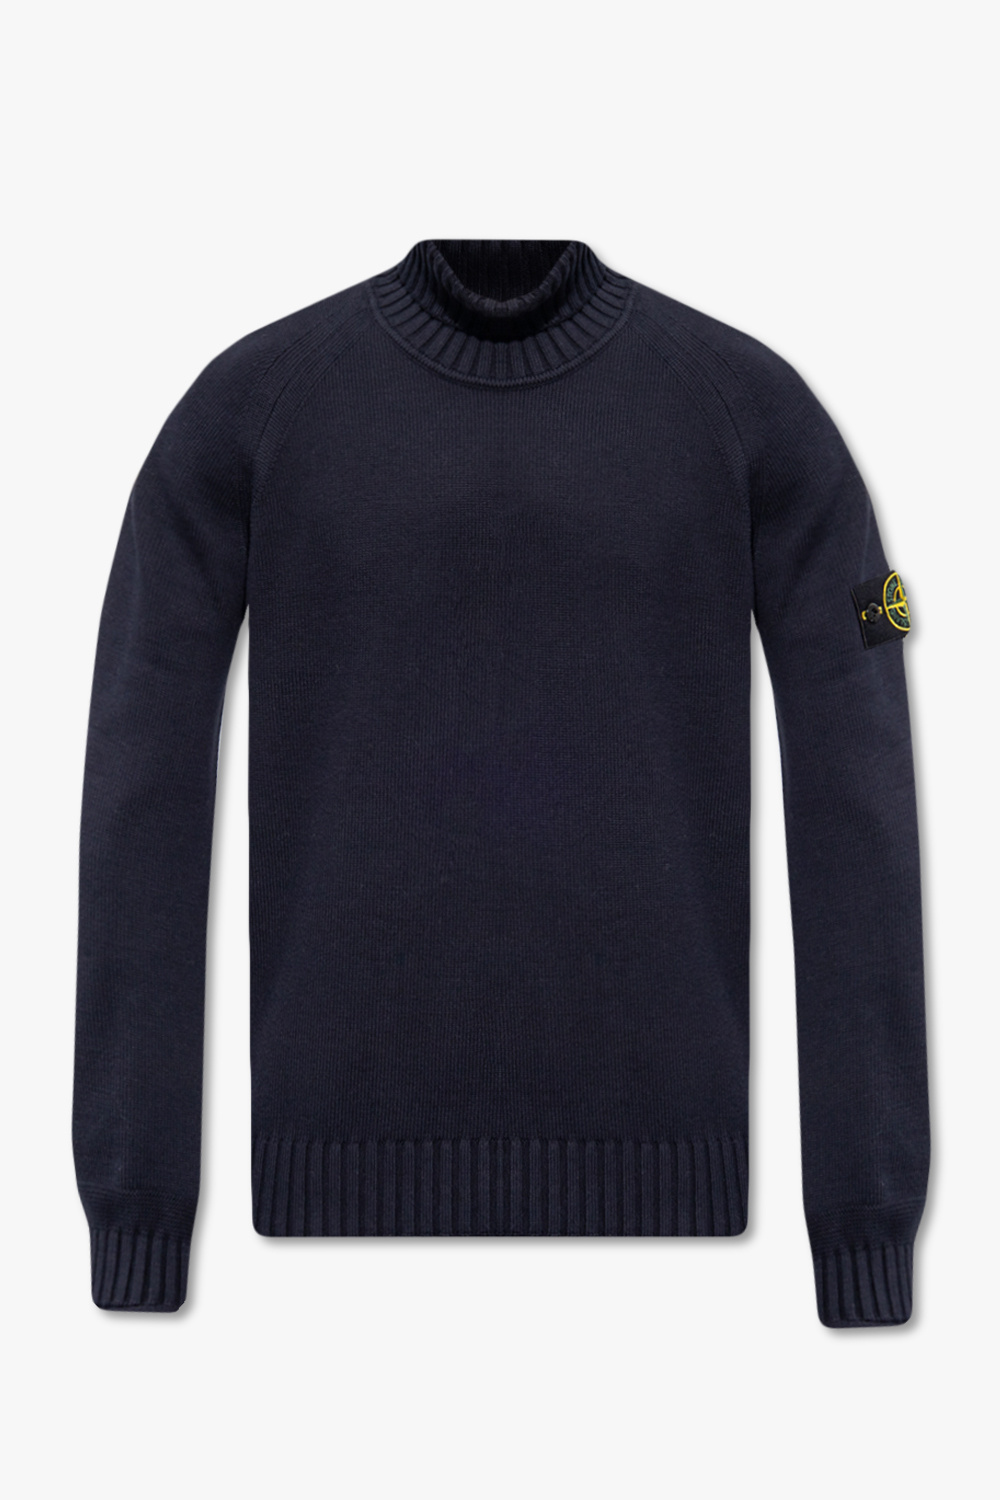 Stone Island Cotton turtleneck sweater with logo